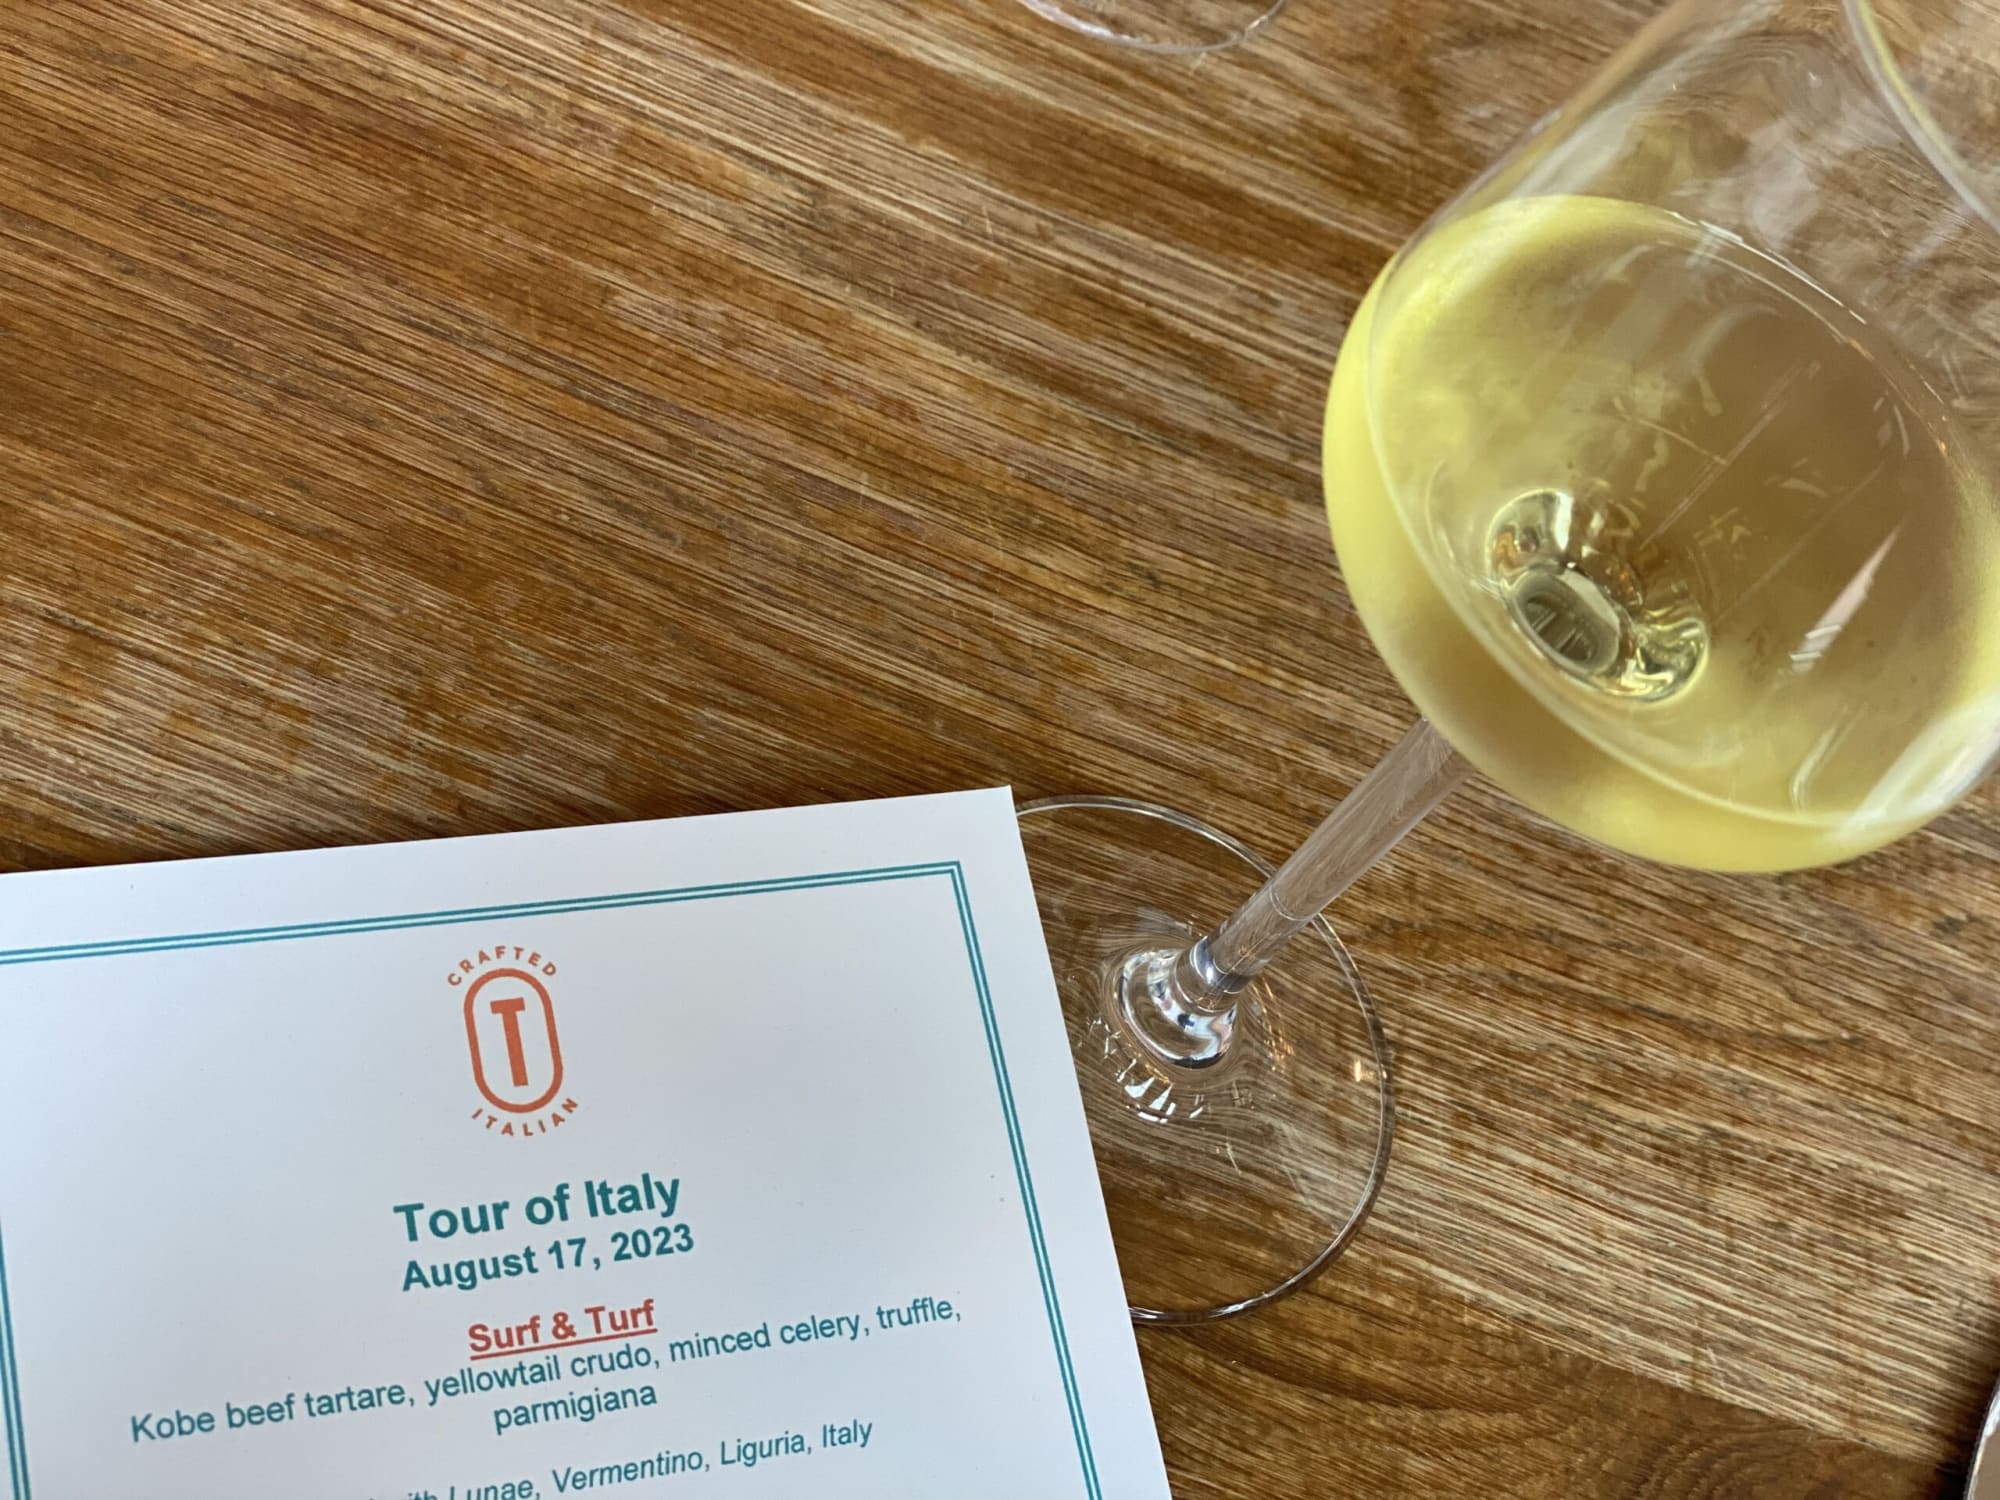 La cena con vino Terralina Crafted Italian Tour of Italy presenta maridajes emocionantes